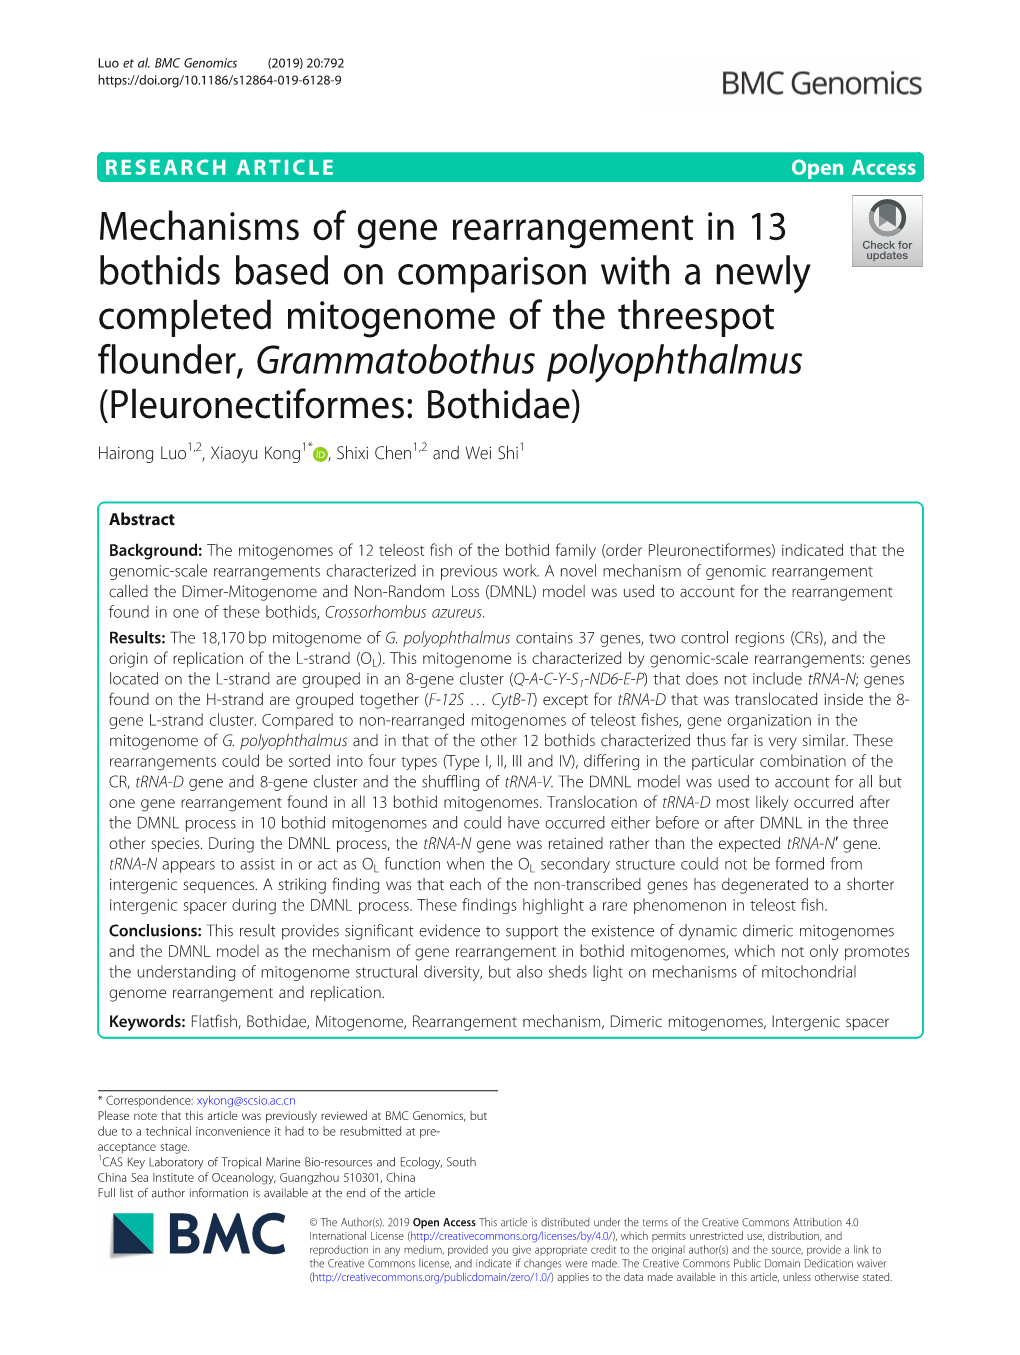 Mechanisms of Gene Rearrangement in 13 Bothids